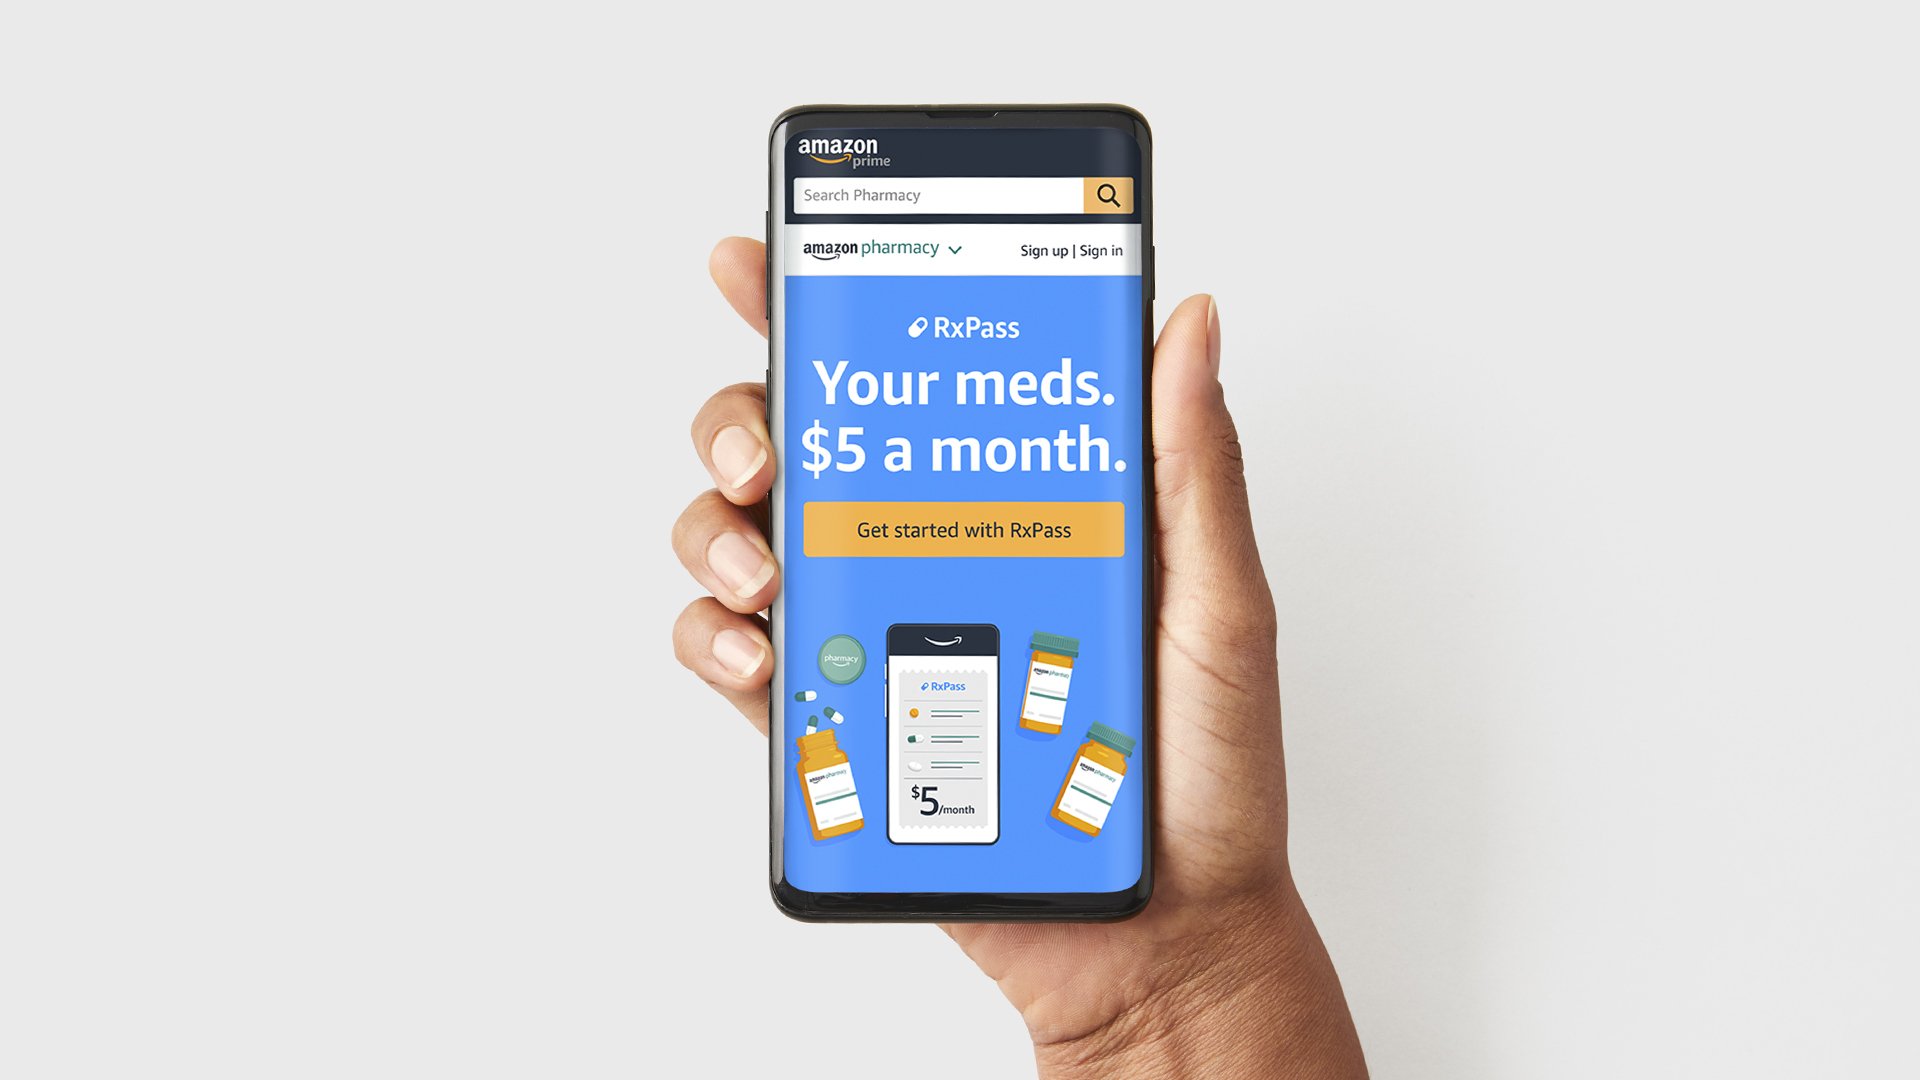 Amazon Pharmacy expands RxPass subscription service to Medicare patients